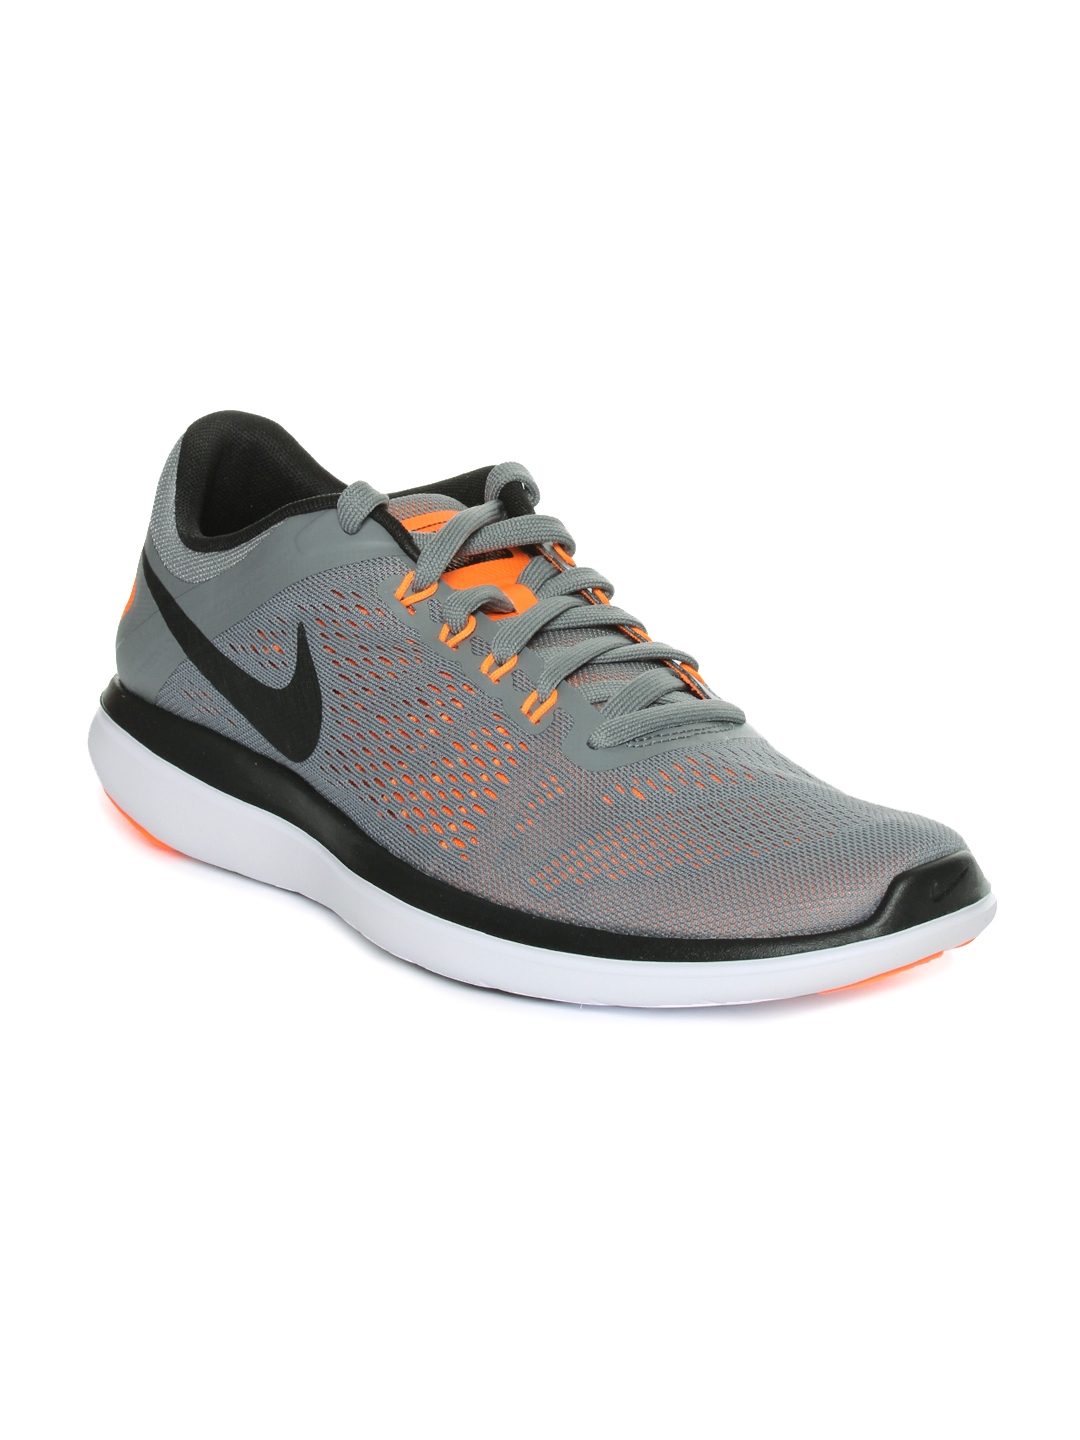 Buy Nike Men Grey Flex 2016 Running Shoes - Sports Shoes for Men ...